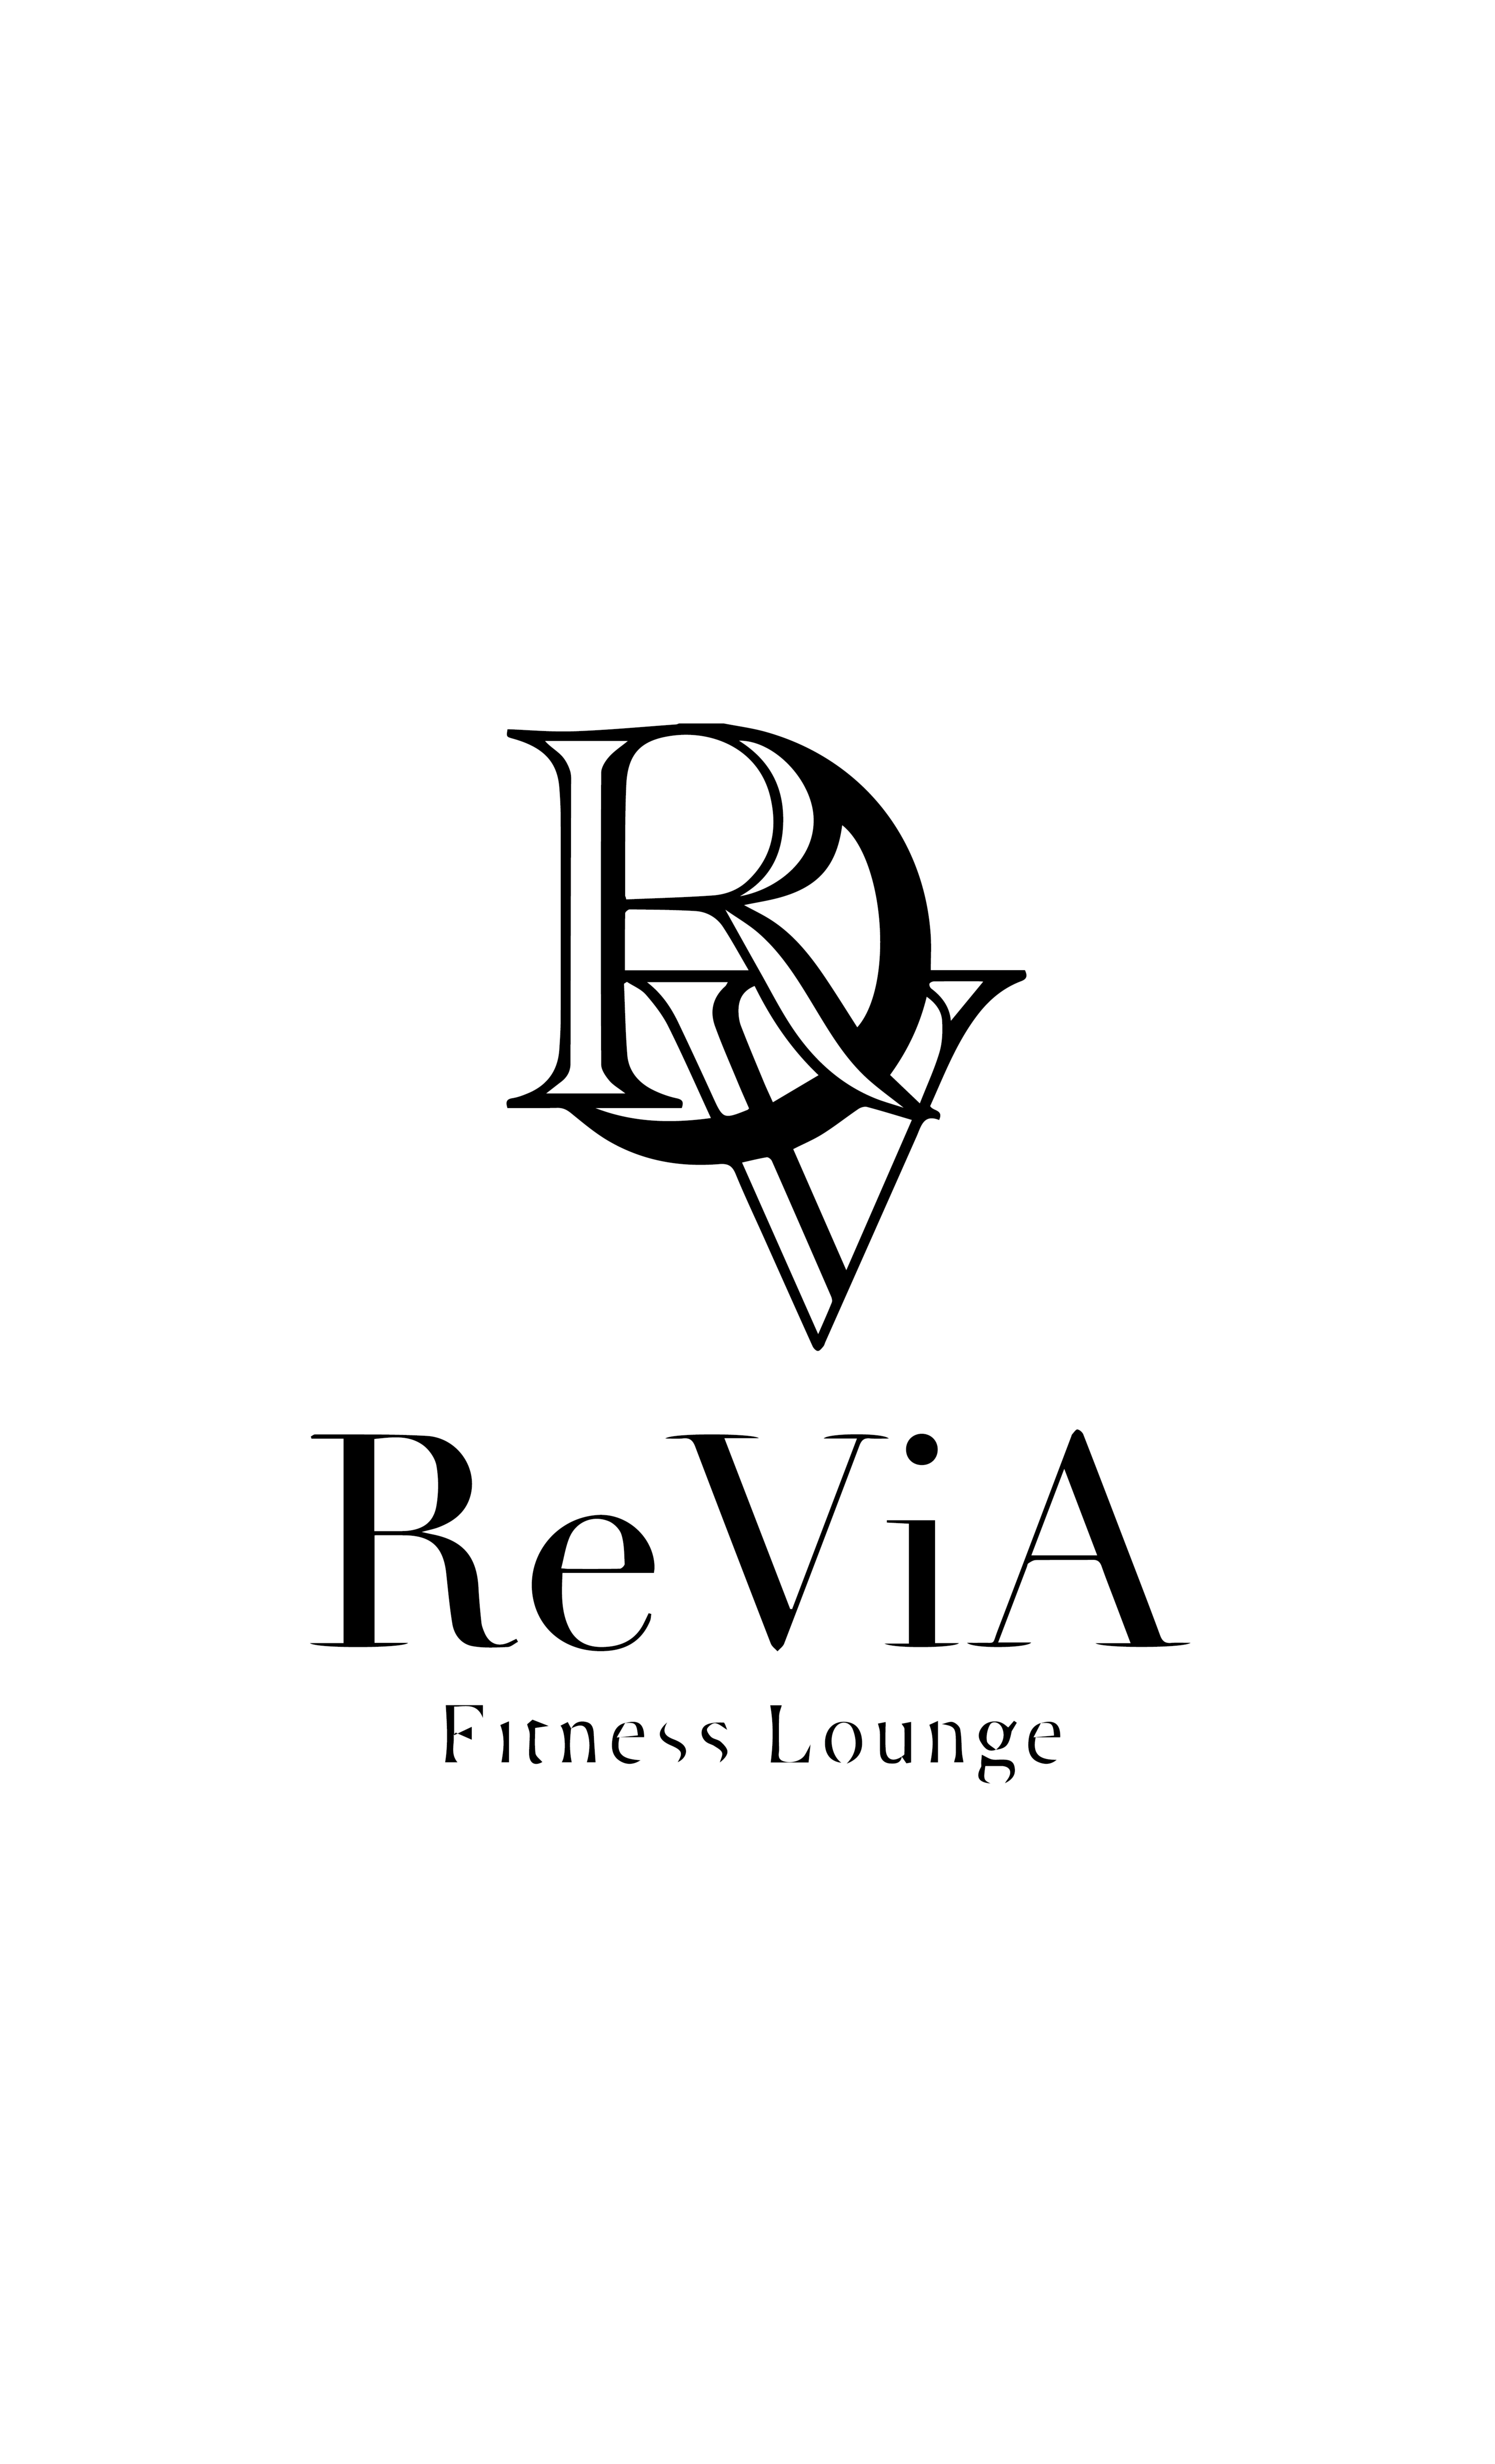 Fitness Lounge ReViA